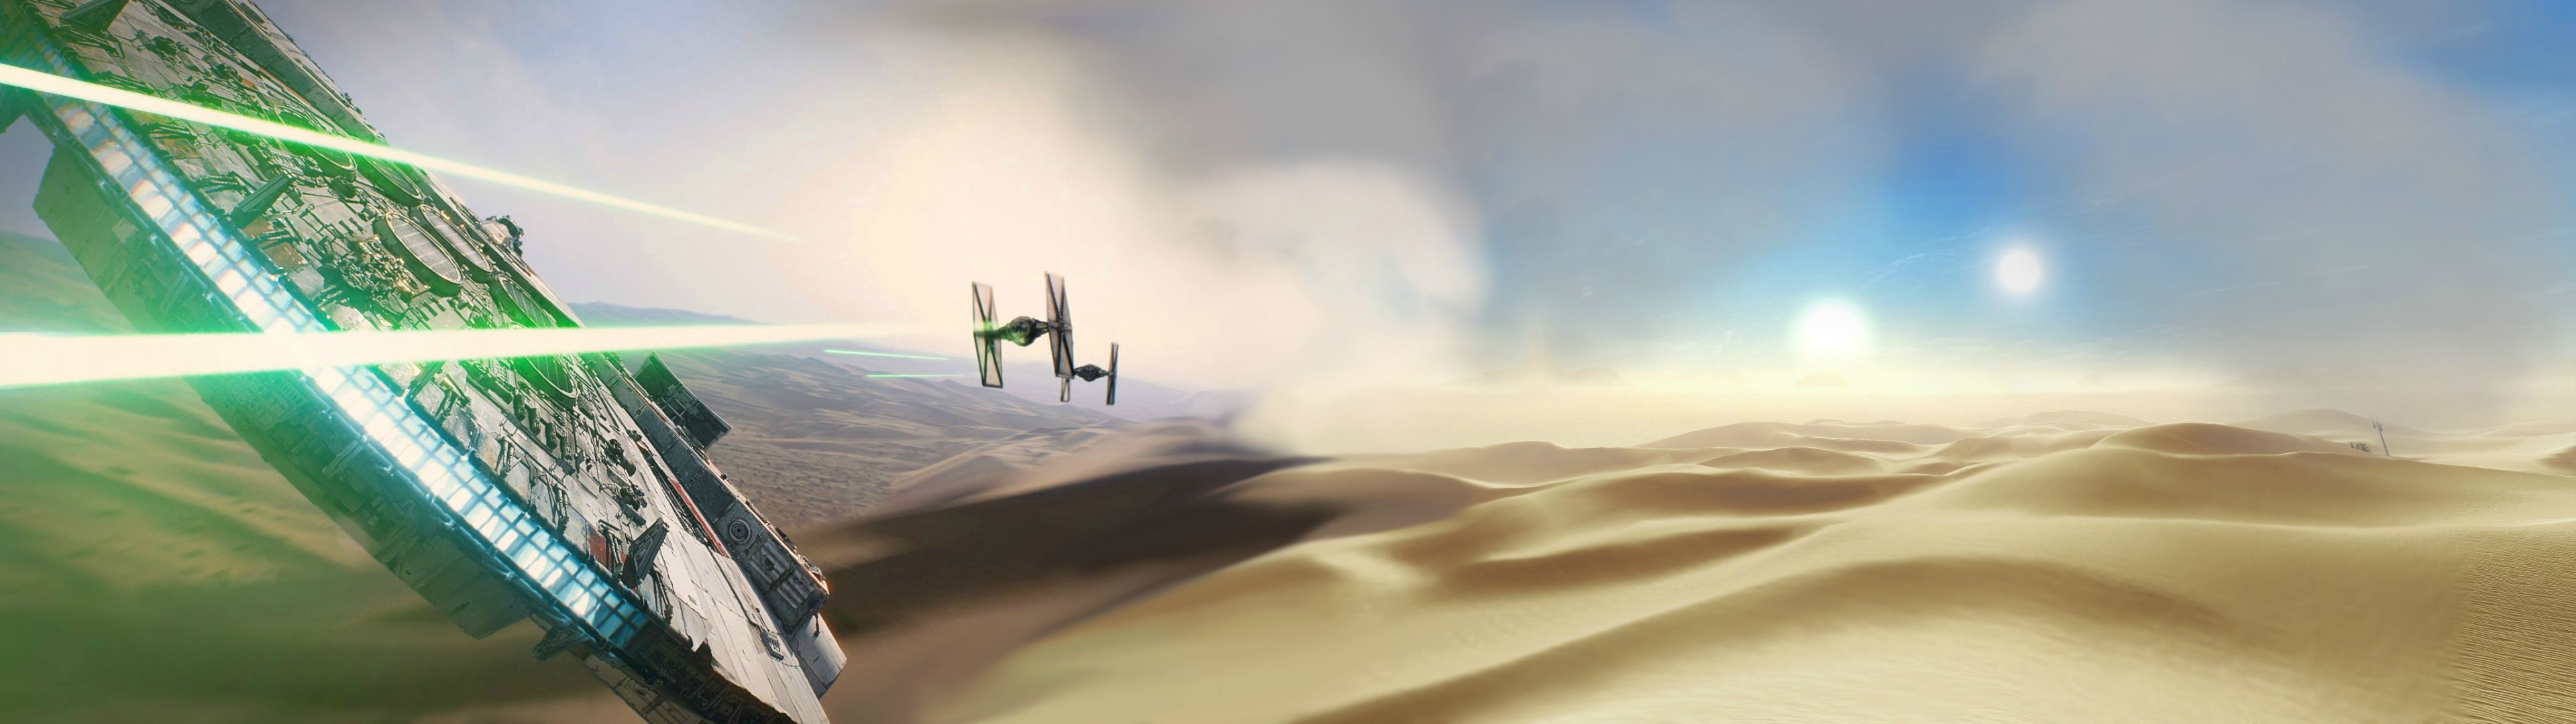 star wars dual screen wallpaper,natural environment,desert,sky,landscape,animation